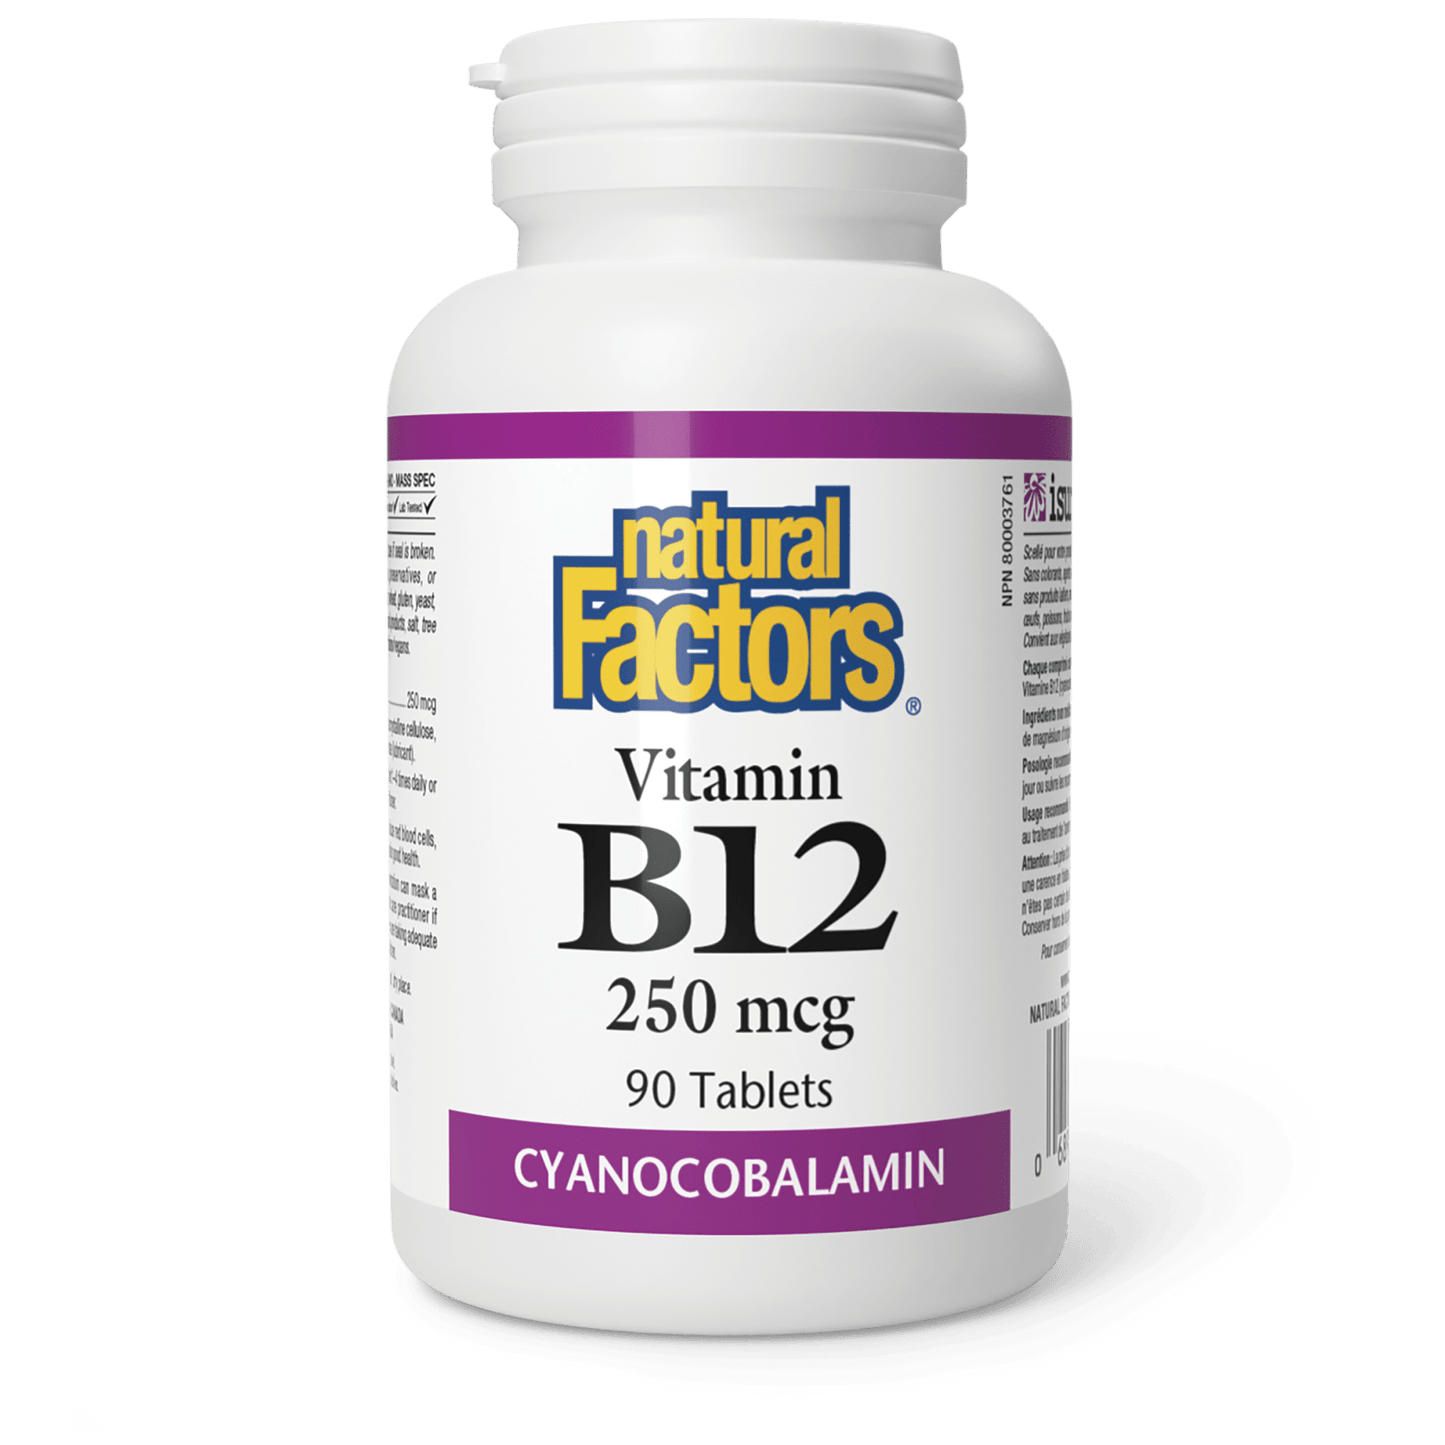 Vitamin B12 250 mcg, Natural Factors|v|image|1240